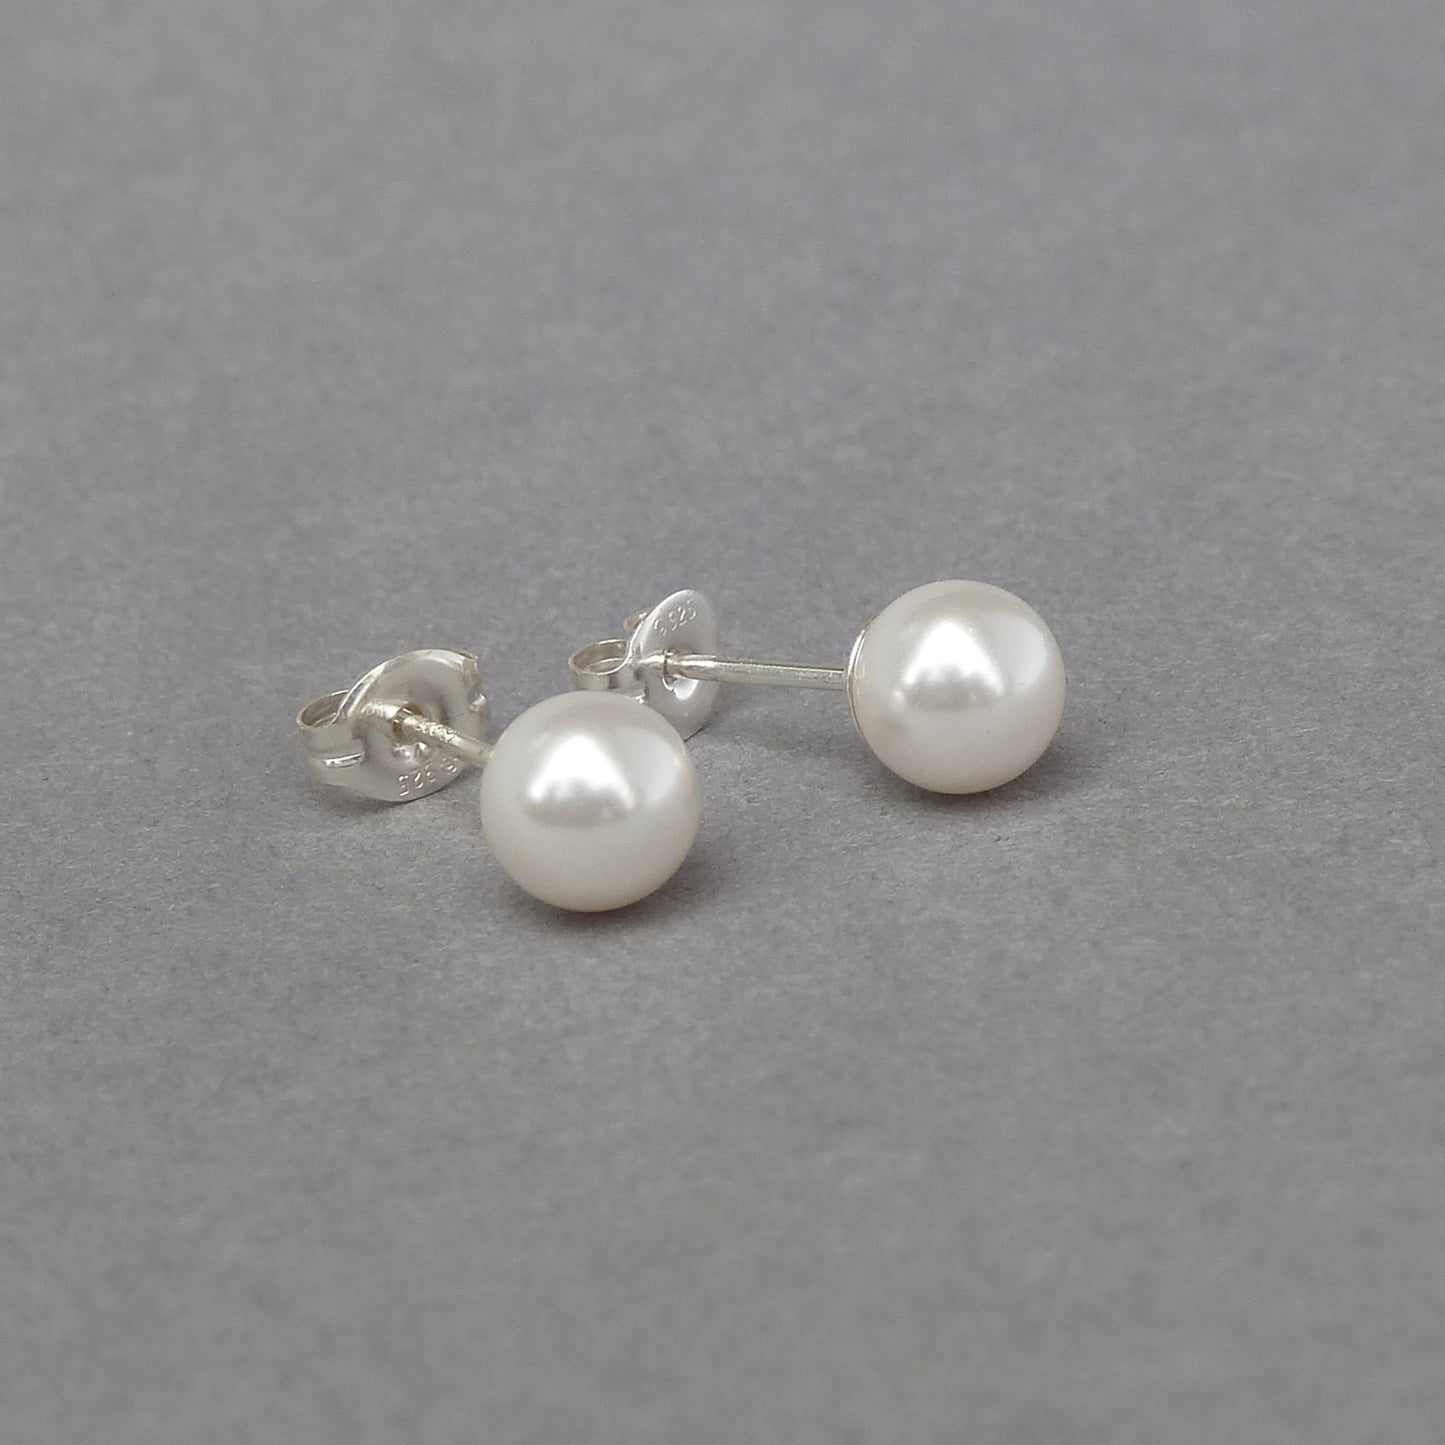 Small white pearl stud earrings